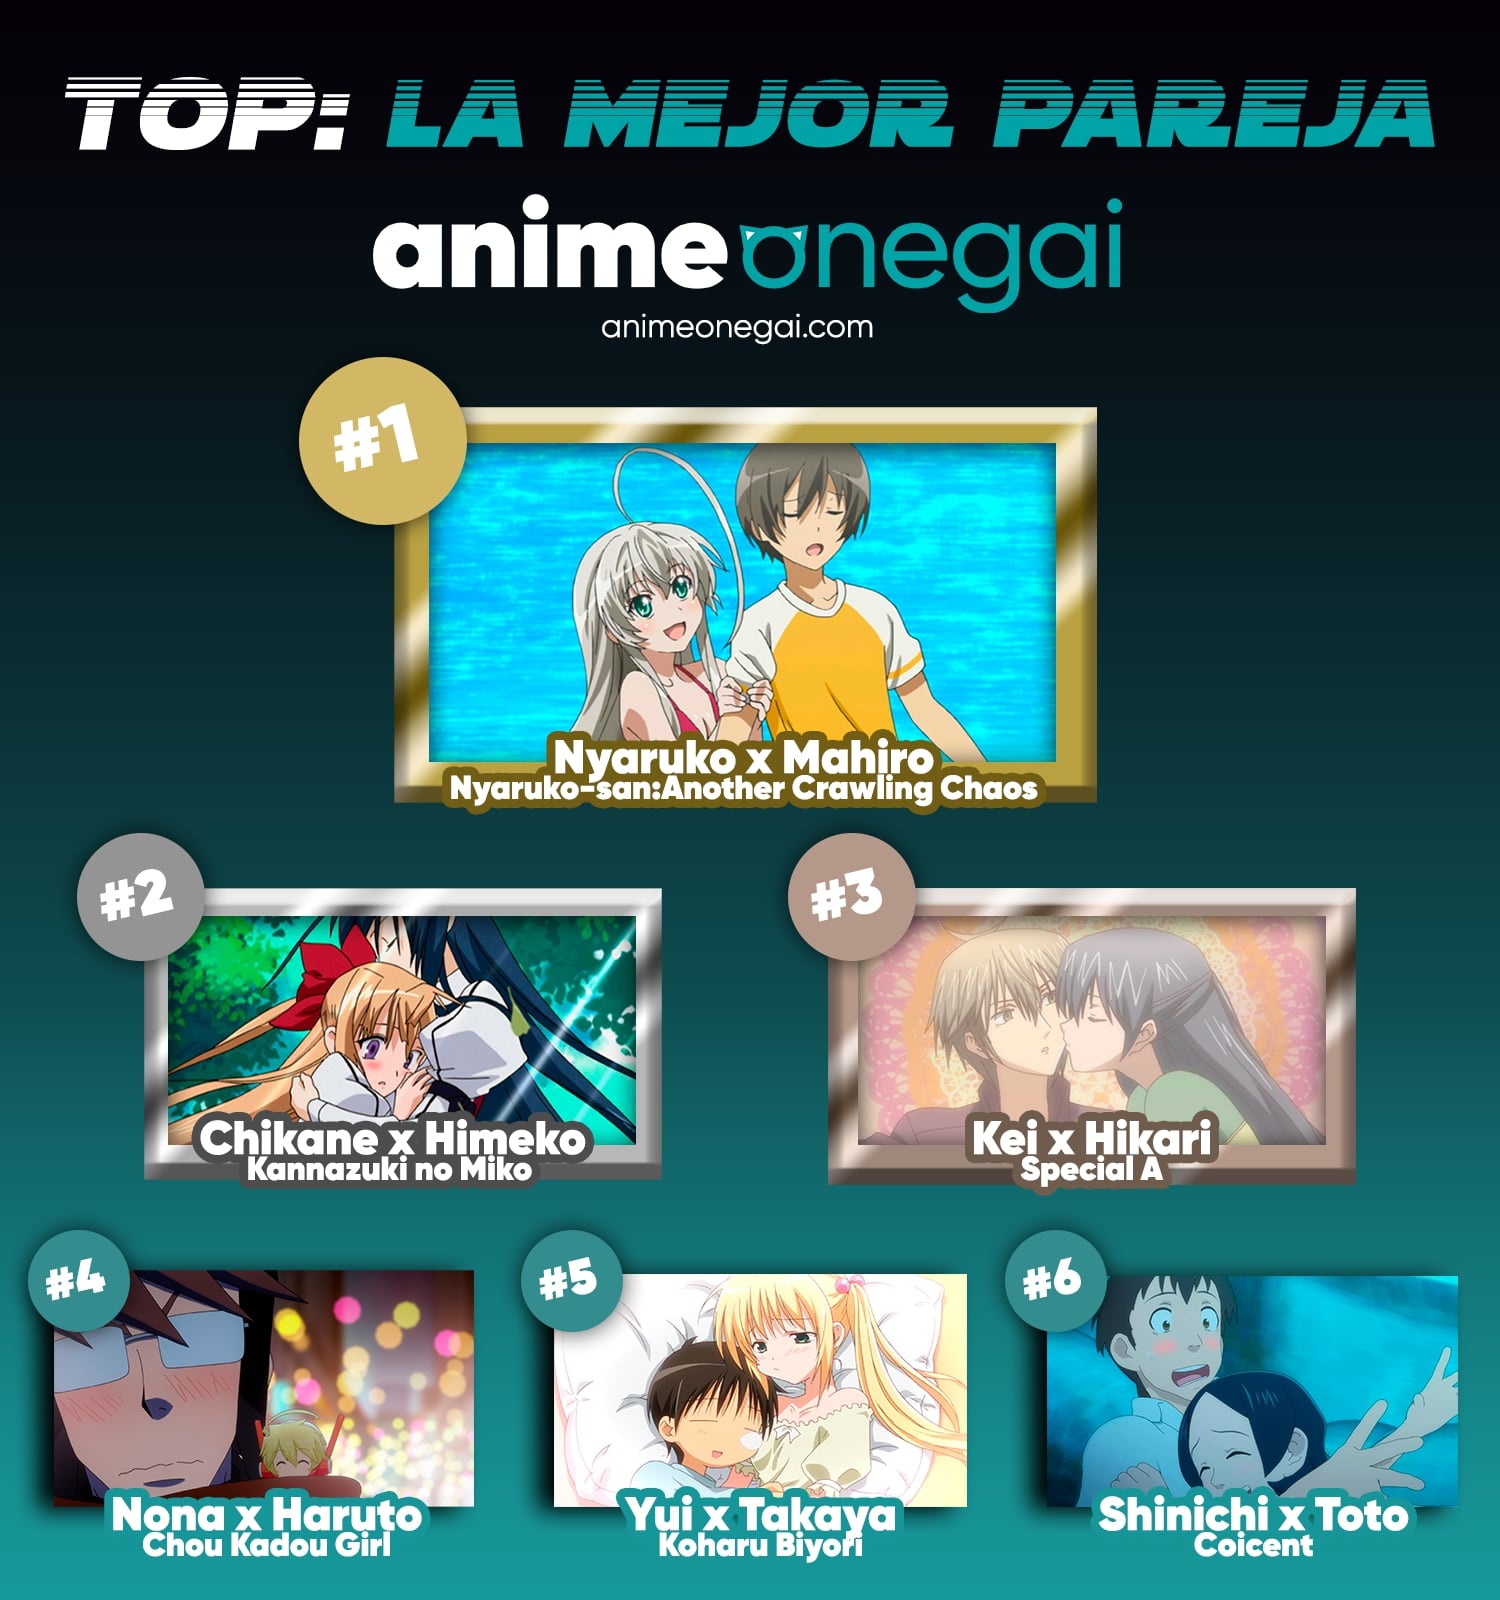 Anime Onegai Top Mejor Pareja